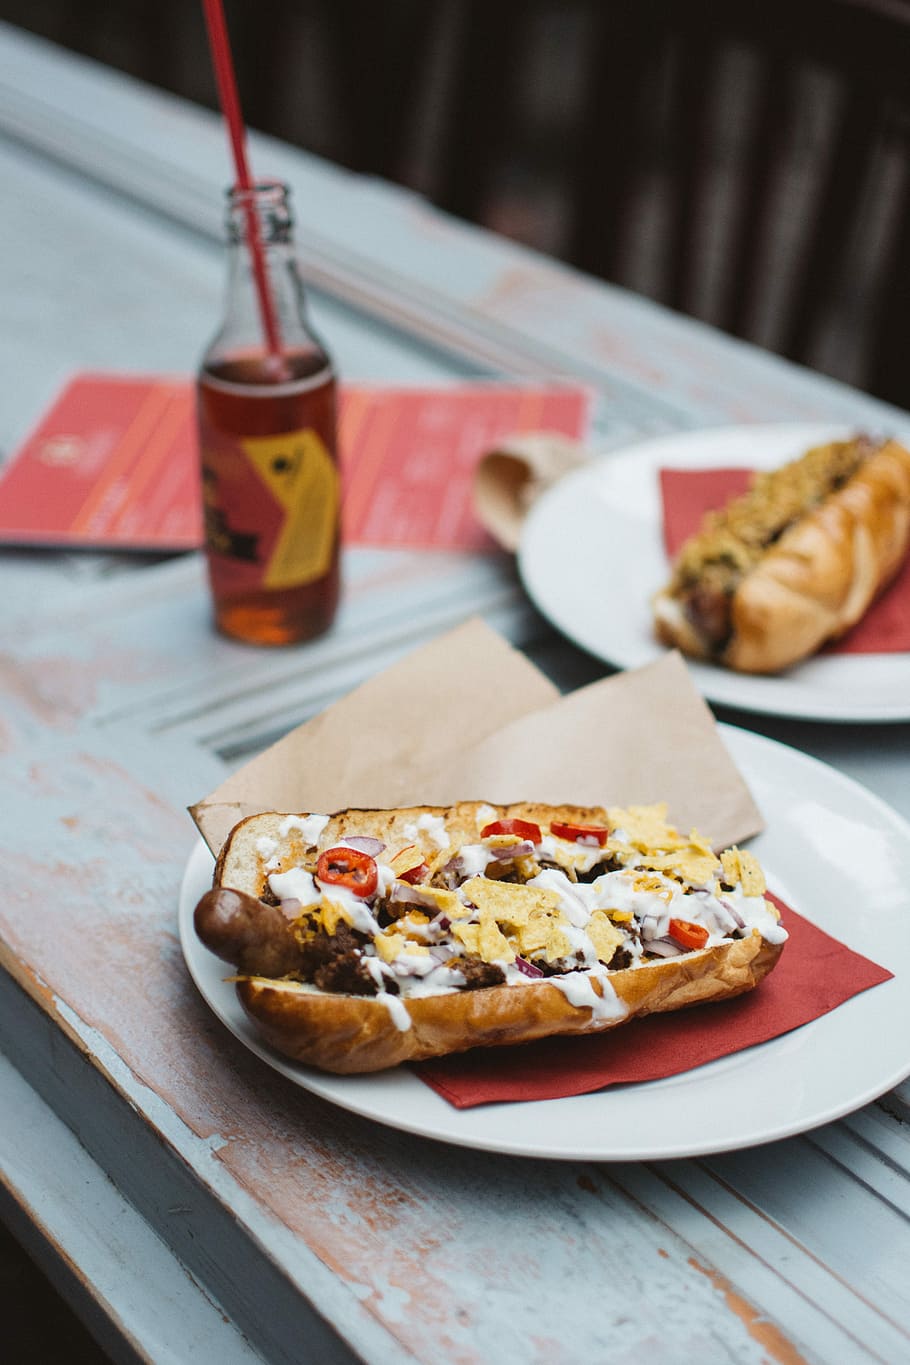 hotdog daging sapi yang mengagumkan, daging sapi, hotdog, tangan, hot dog, daging, makanan, gourmet, piring, camilan